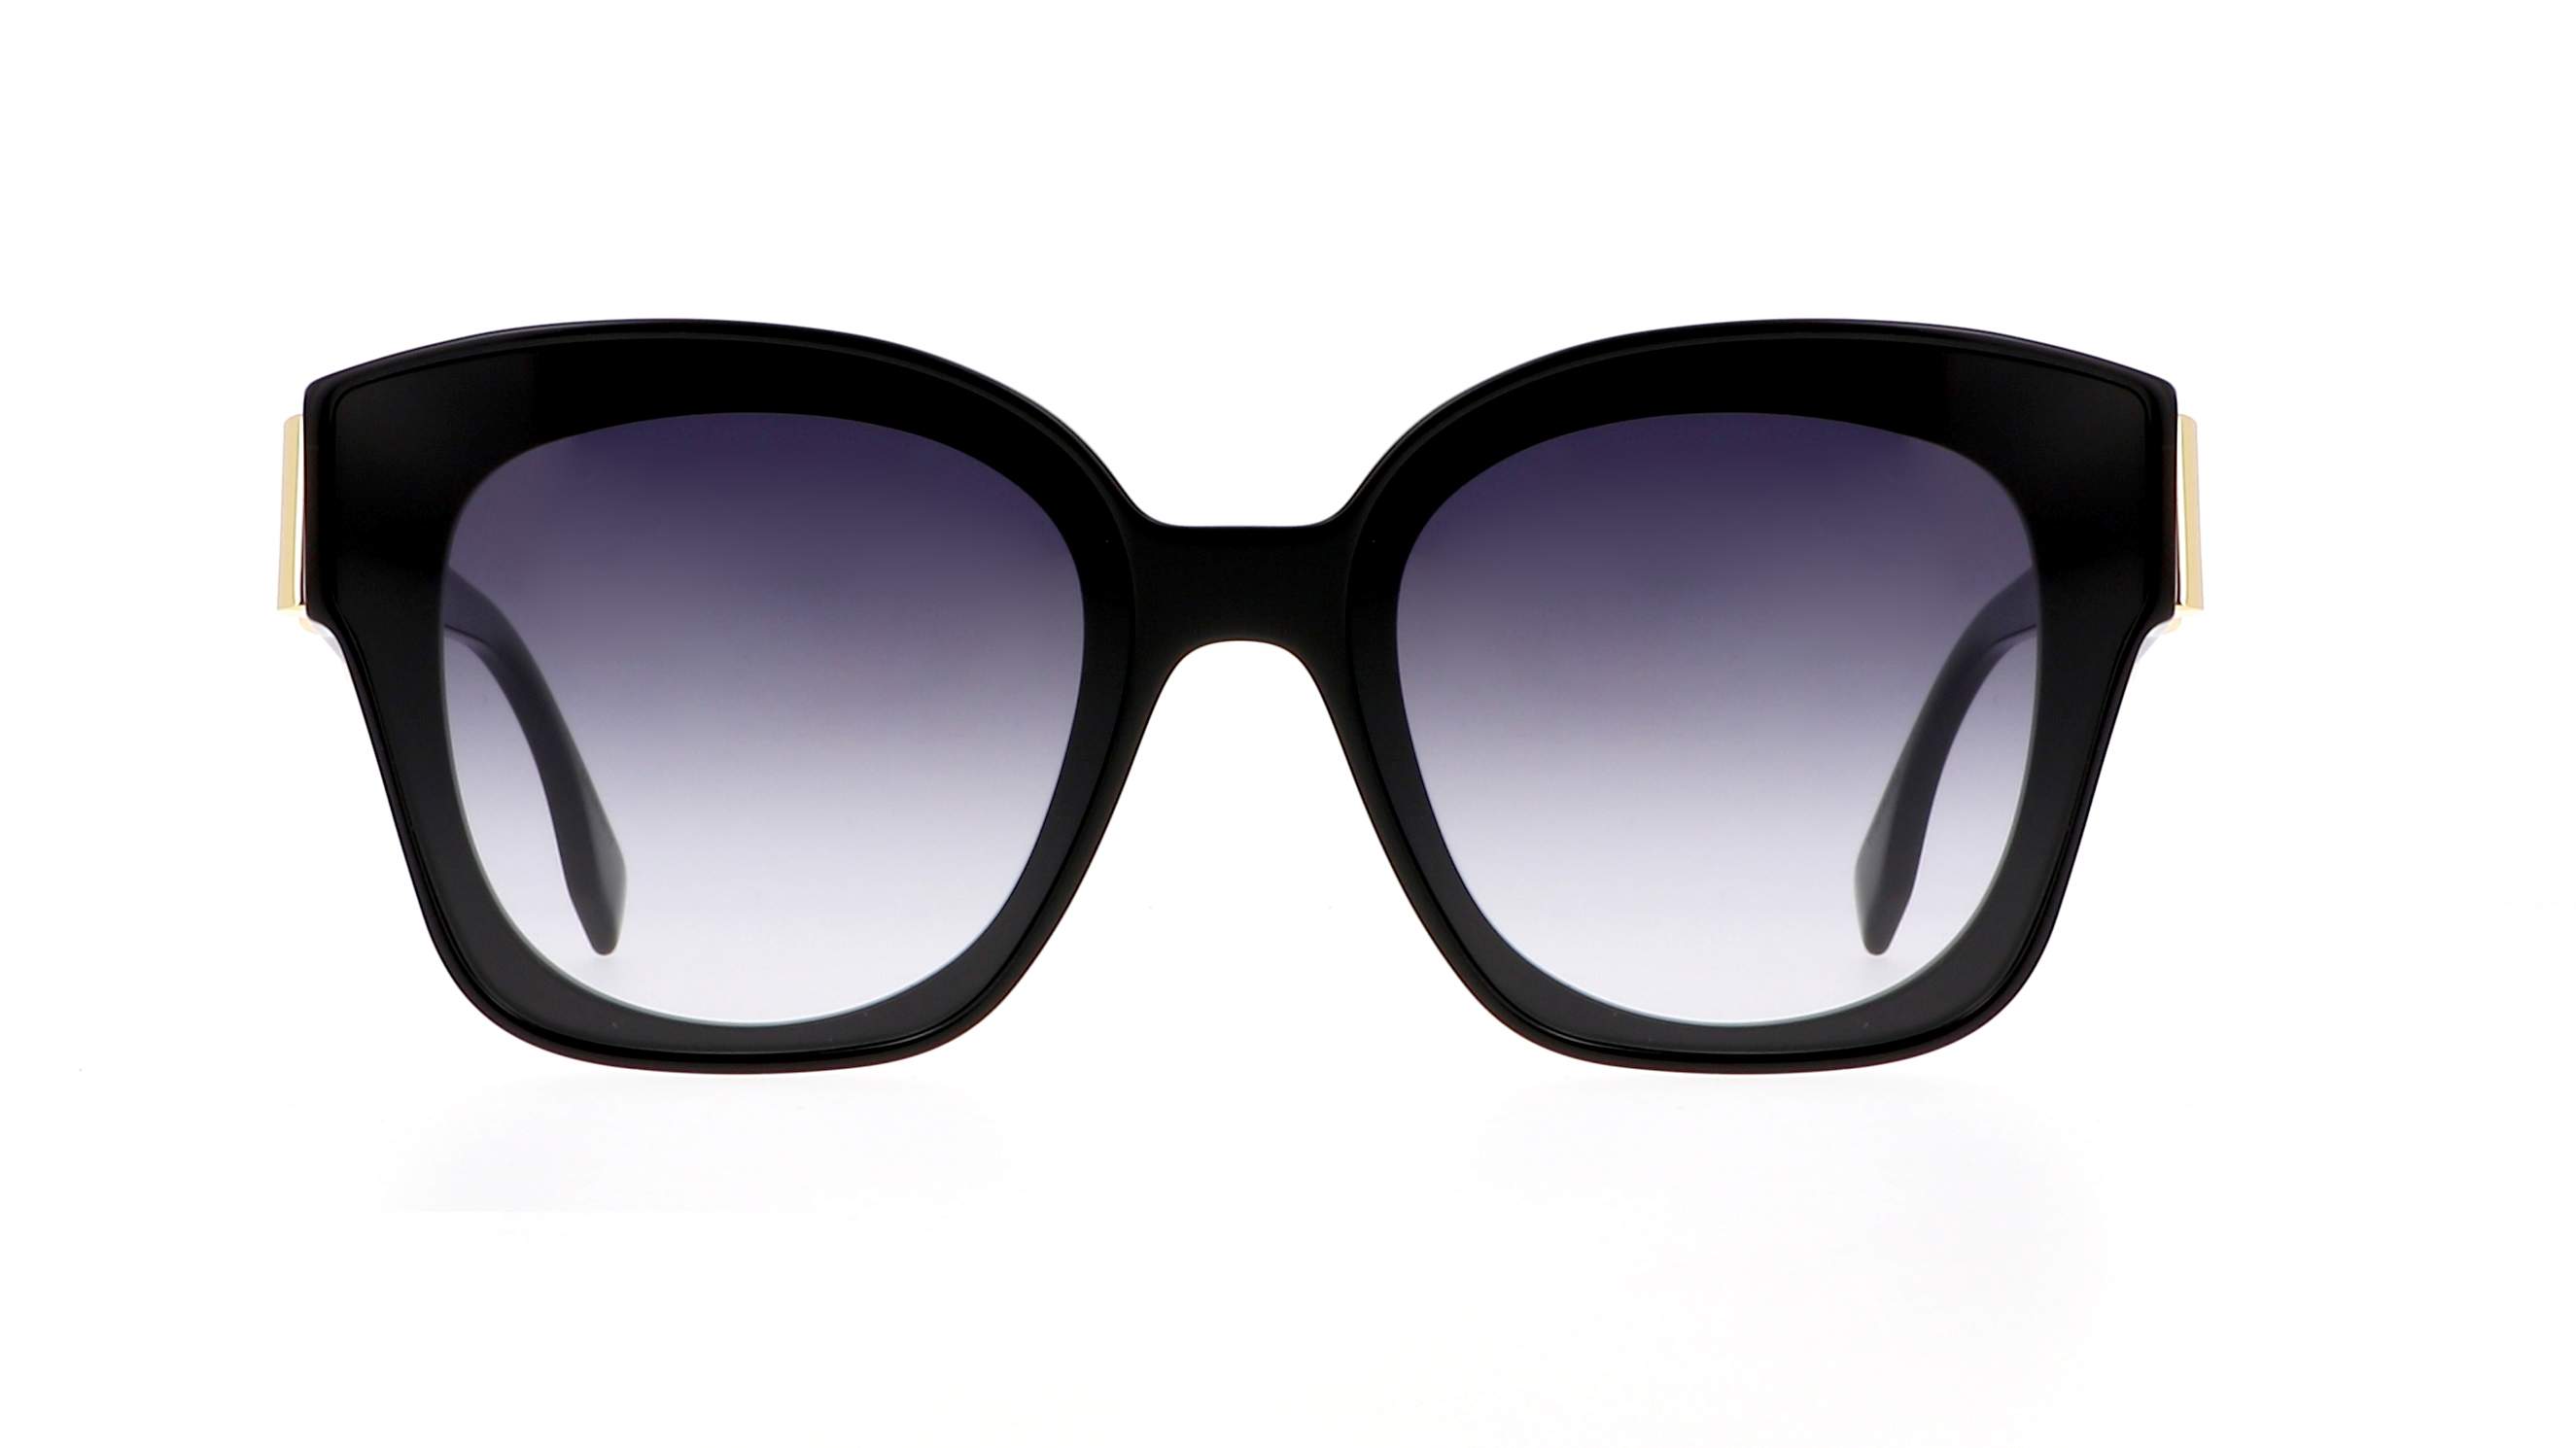 Fendi First Fe Square Sunglasses